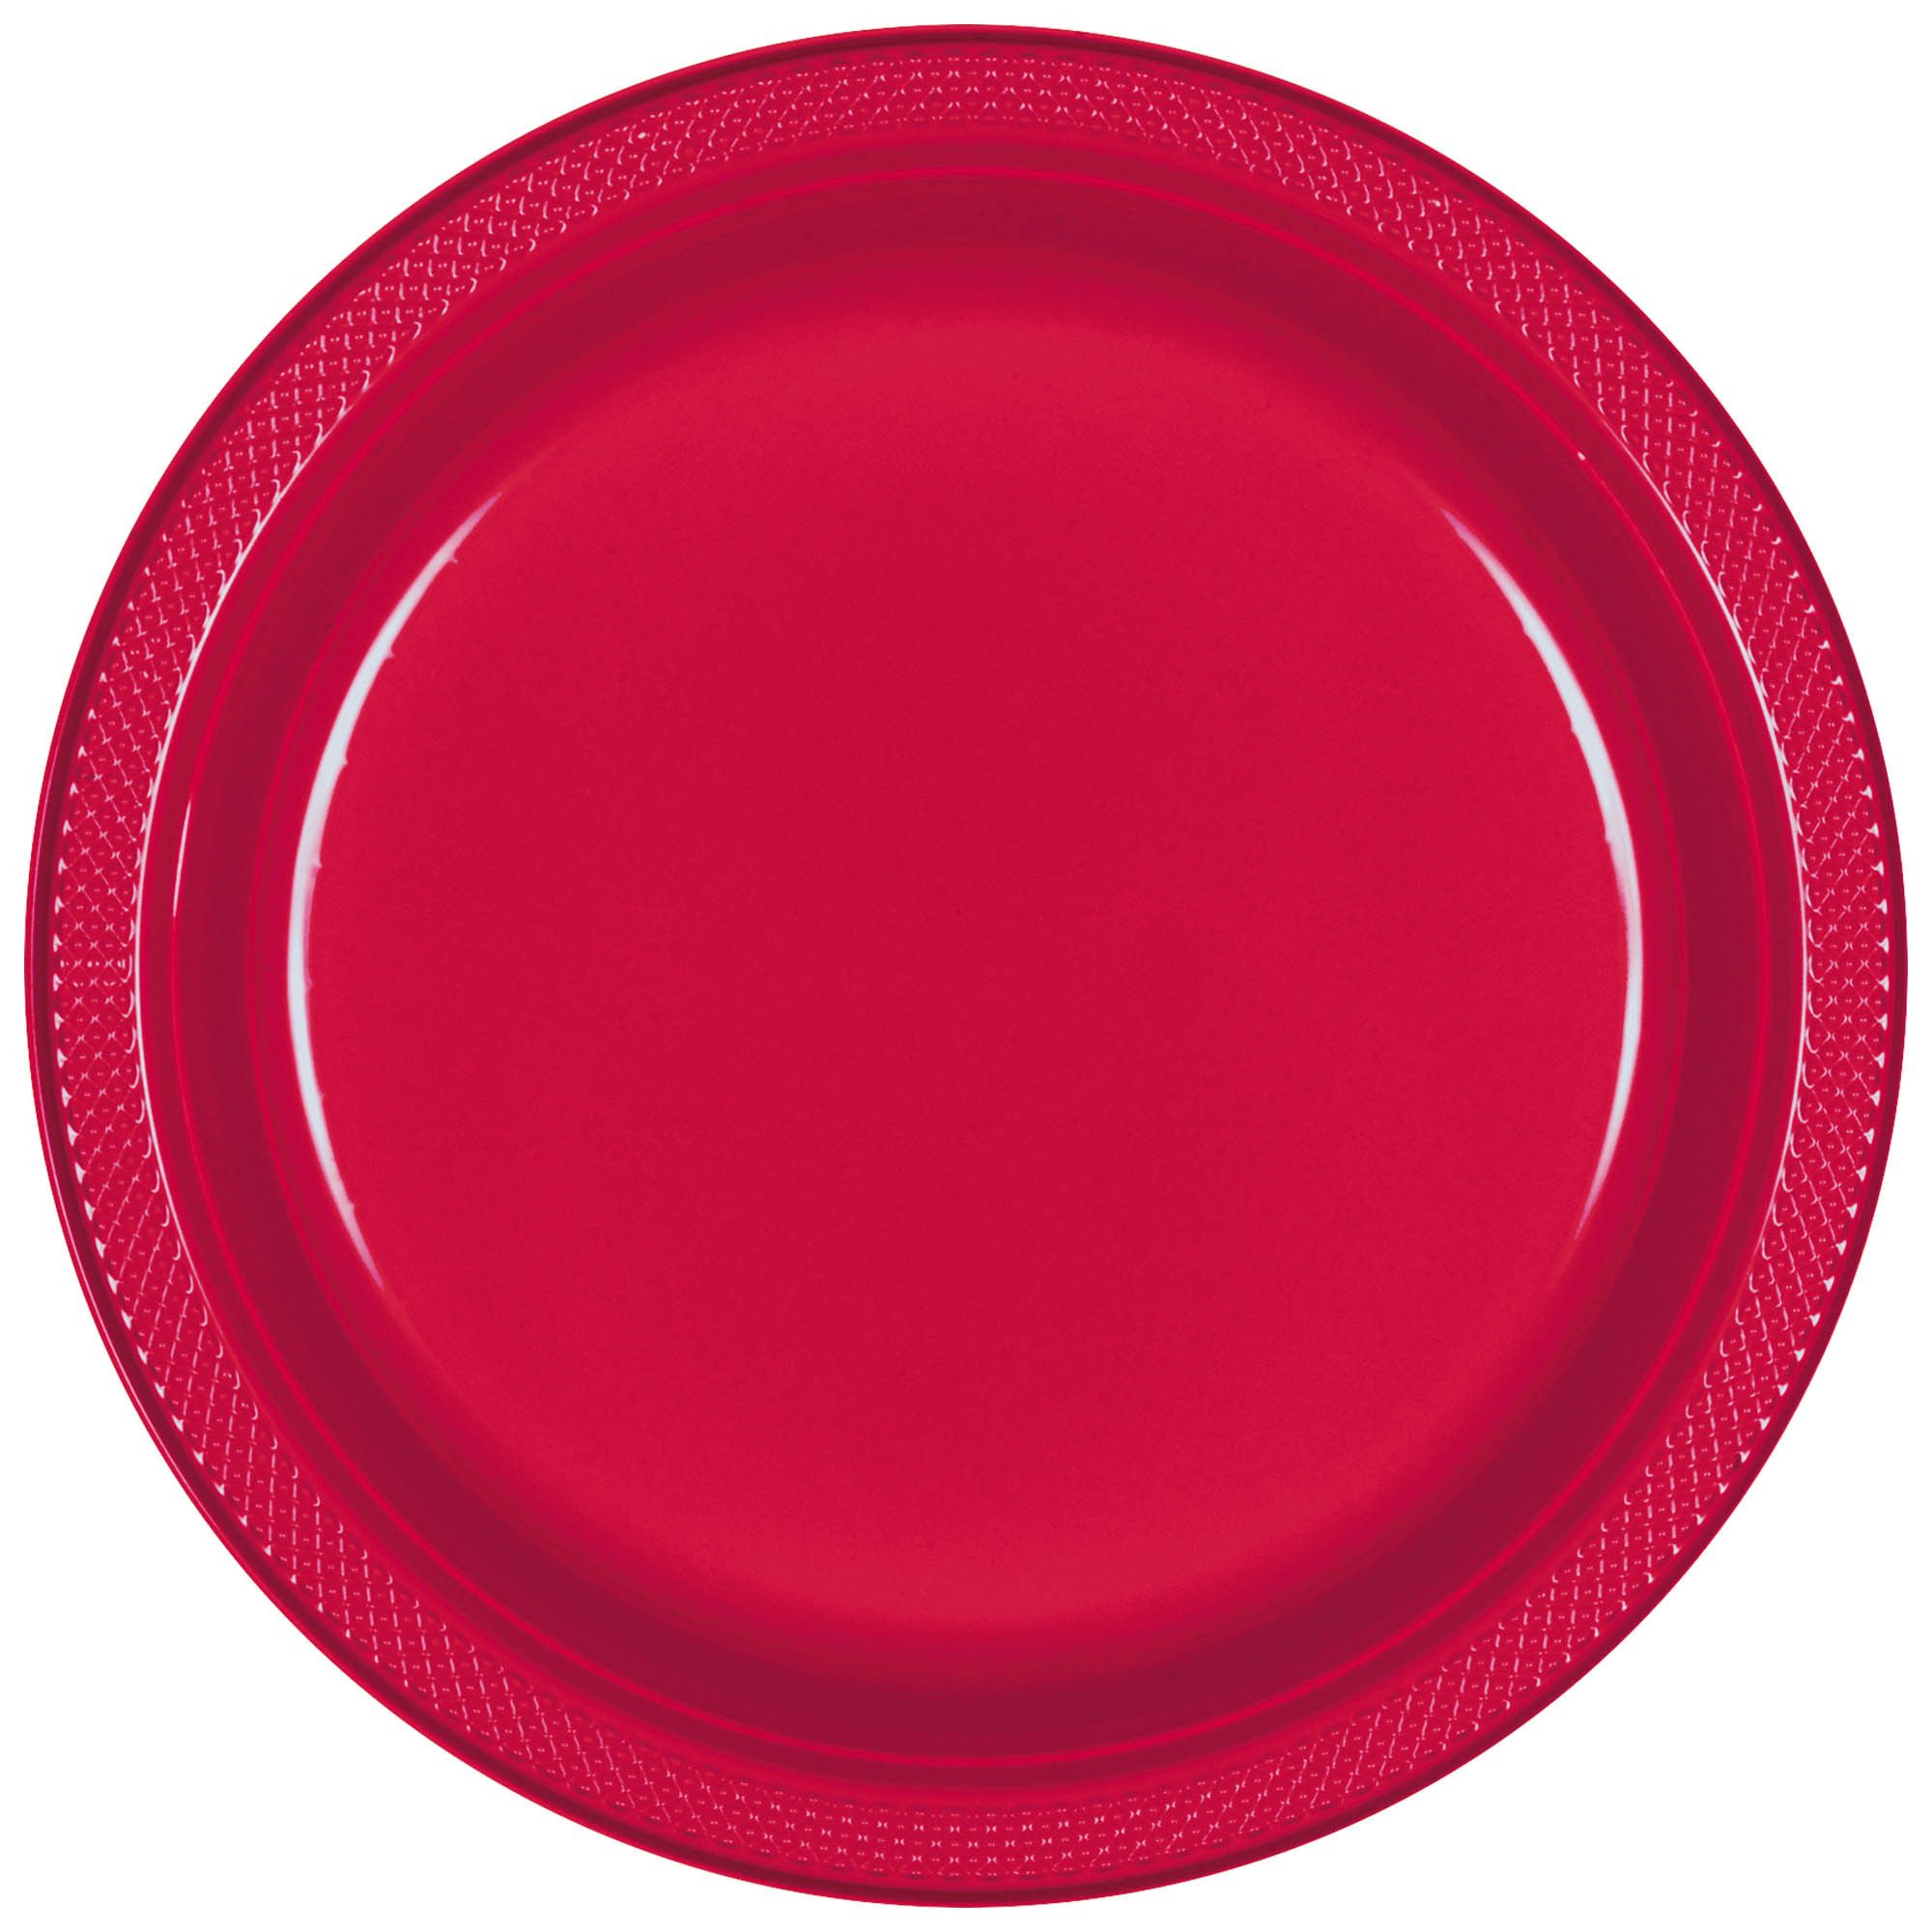 9" Round Plastic Plates 20 Ct. - Apple Red